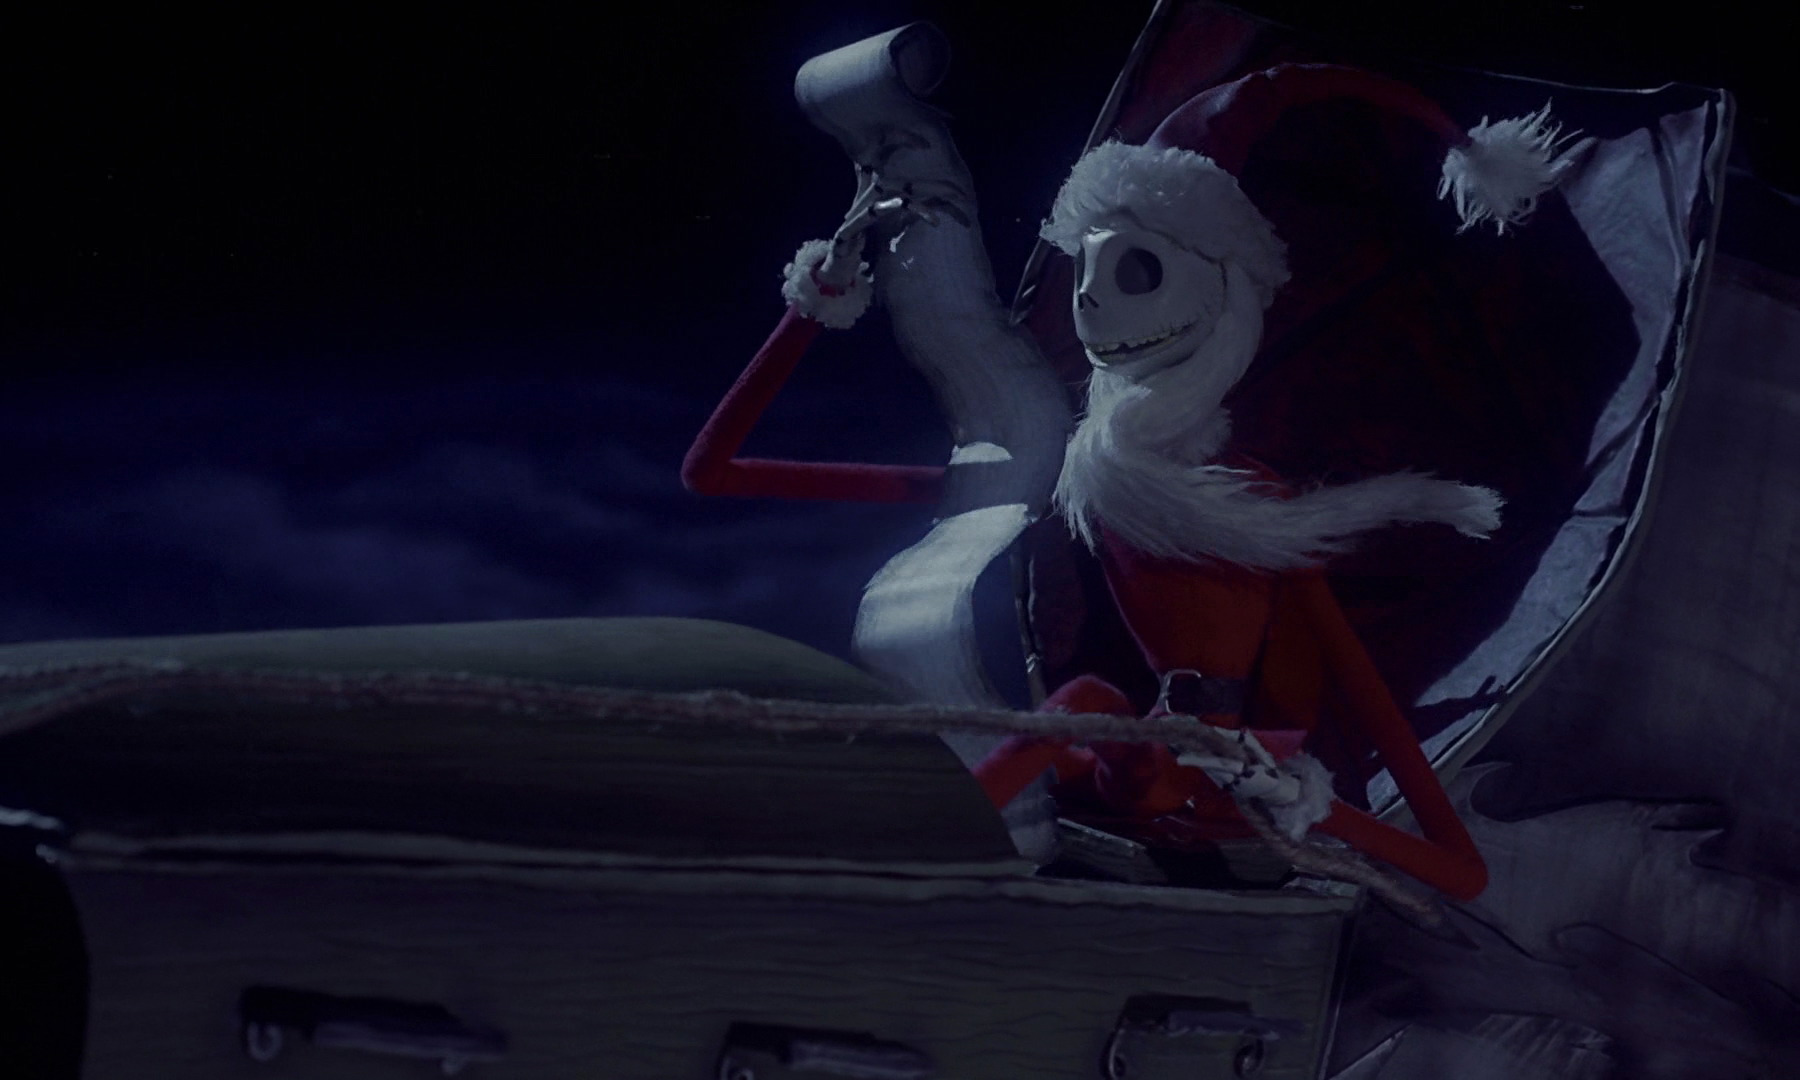 Image Jack.Santa.jpg DisneyWiki